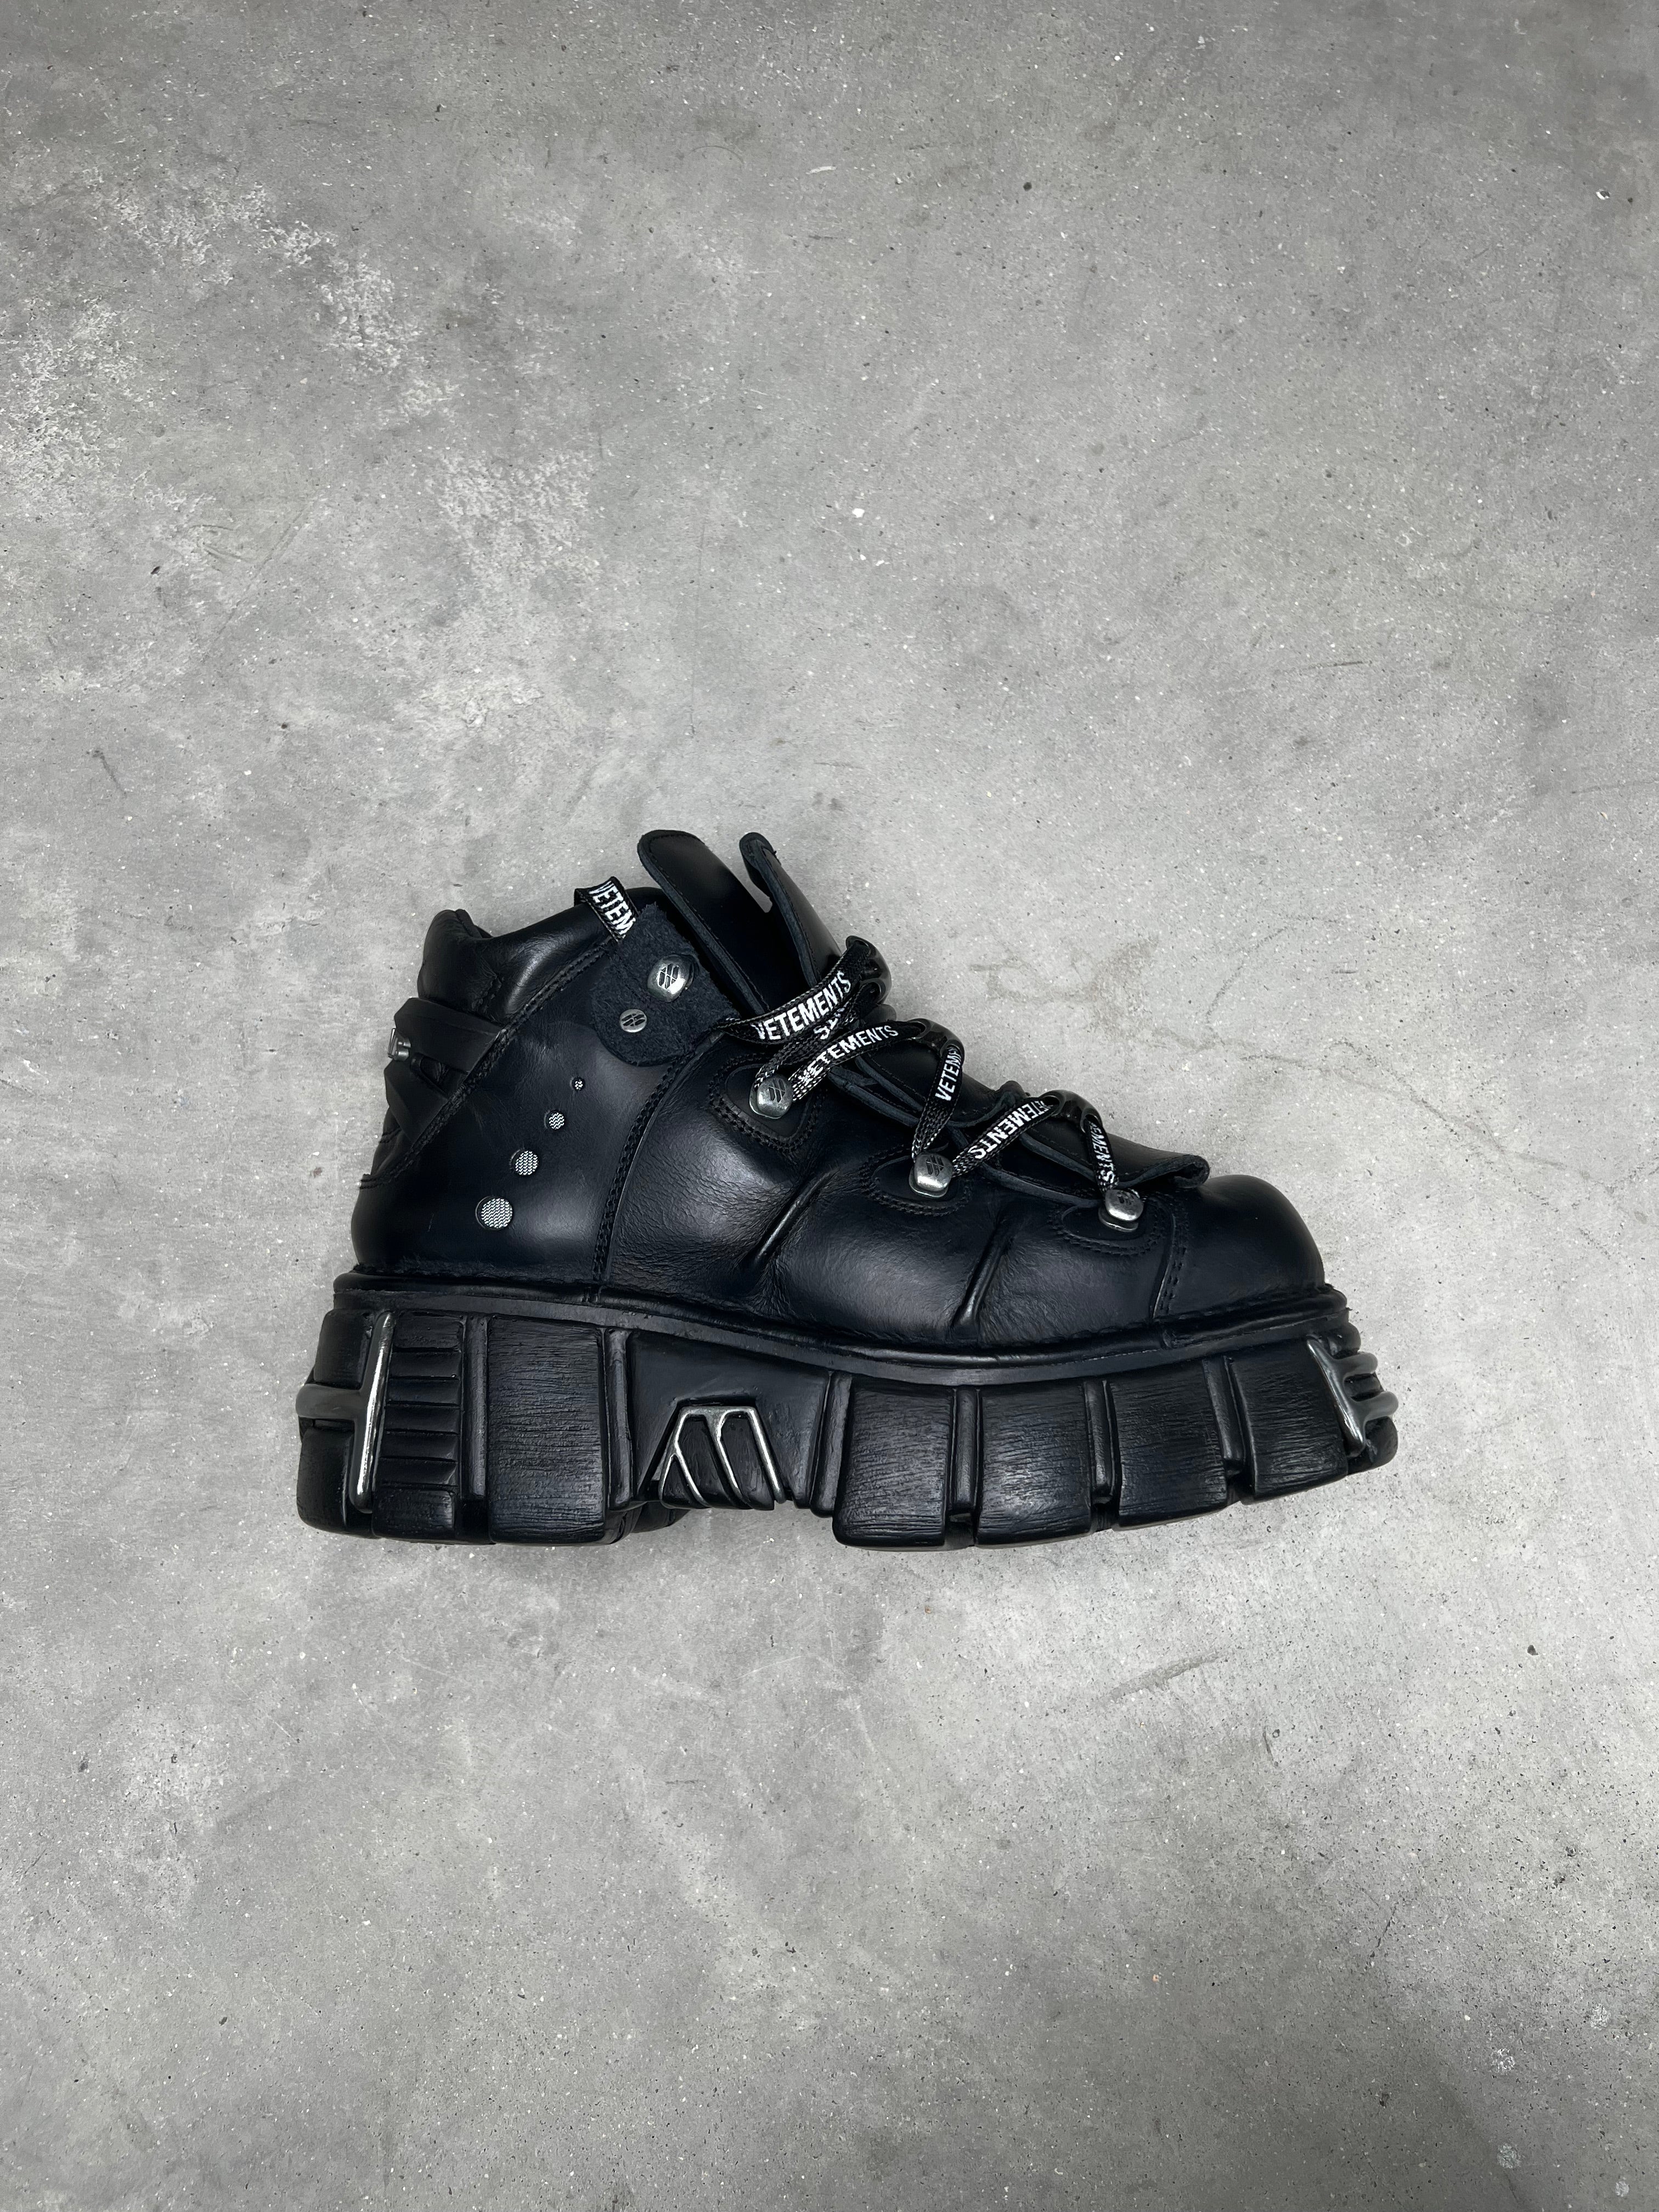 VETEMENTS x New Rock Platform Sneakers – ARCHIVE A